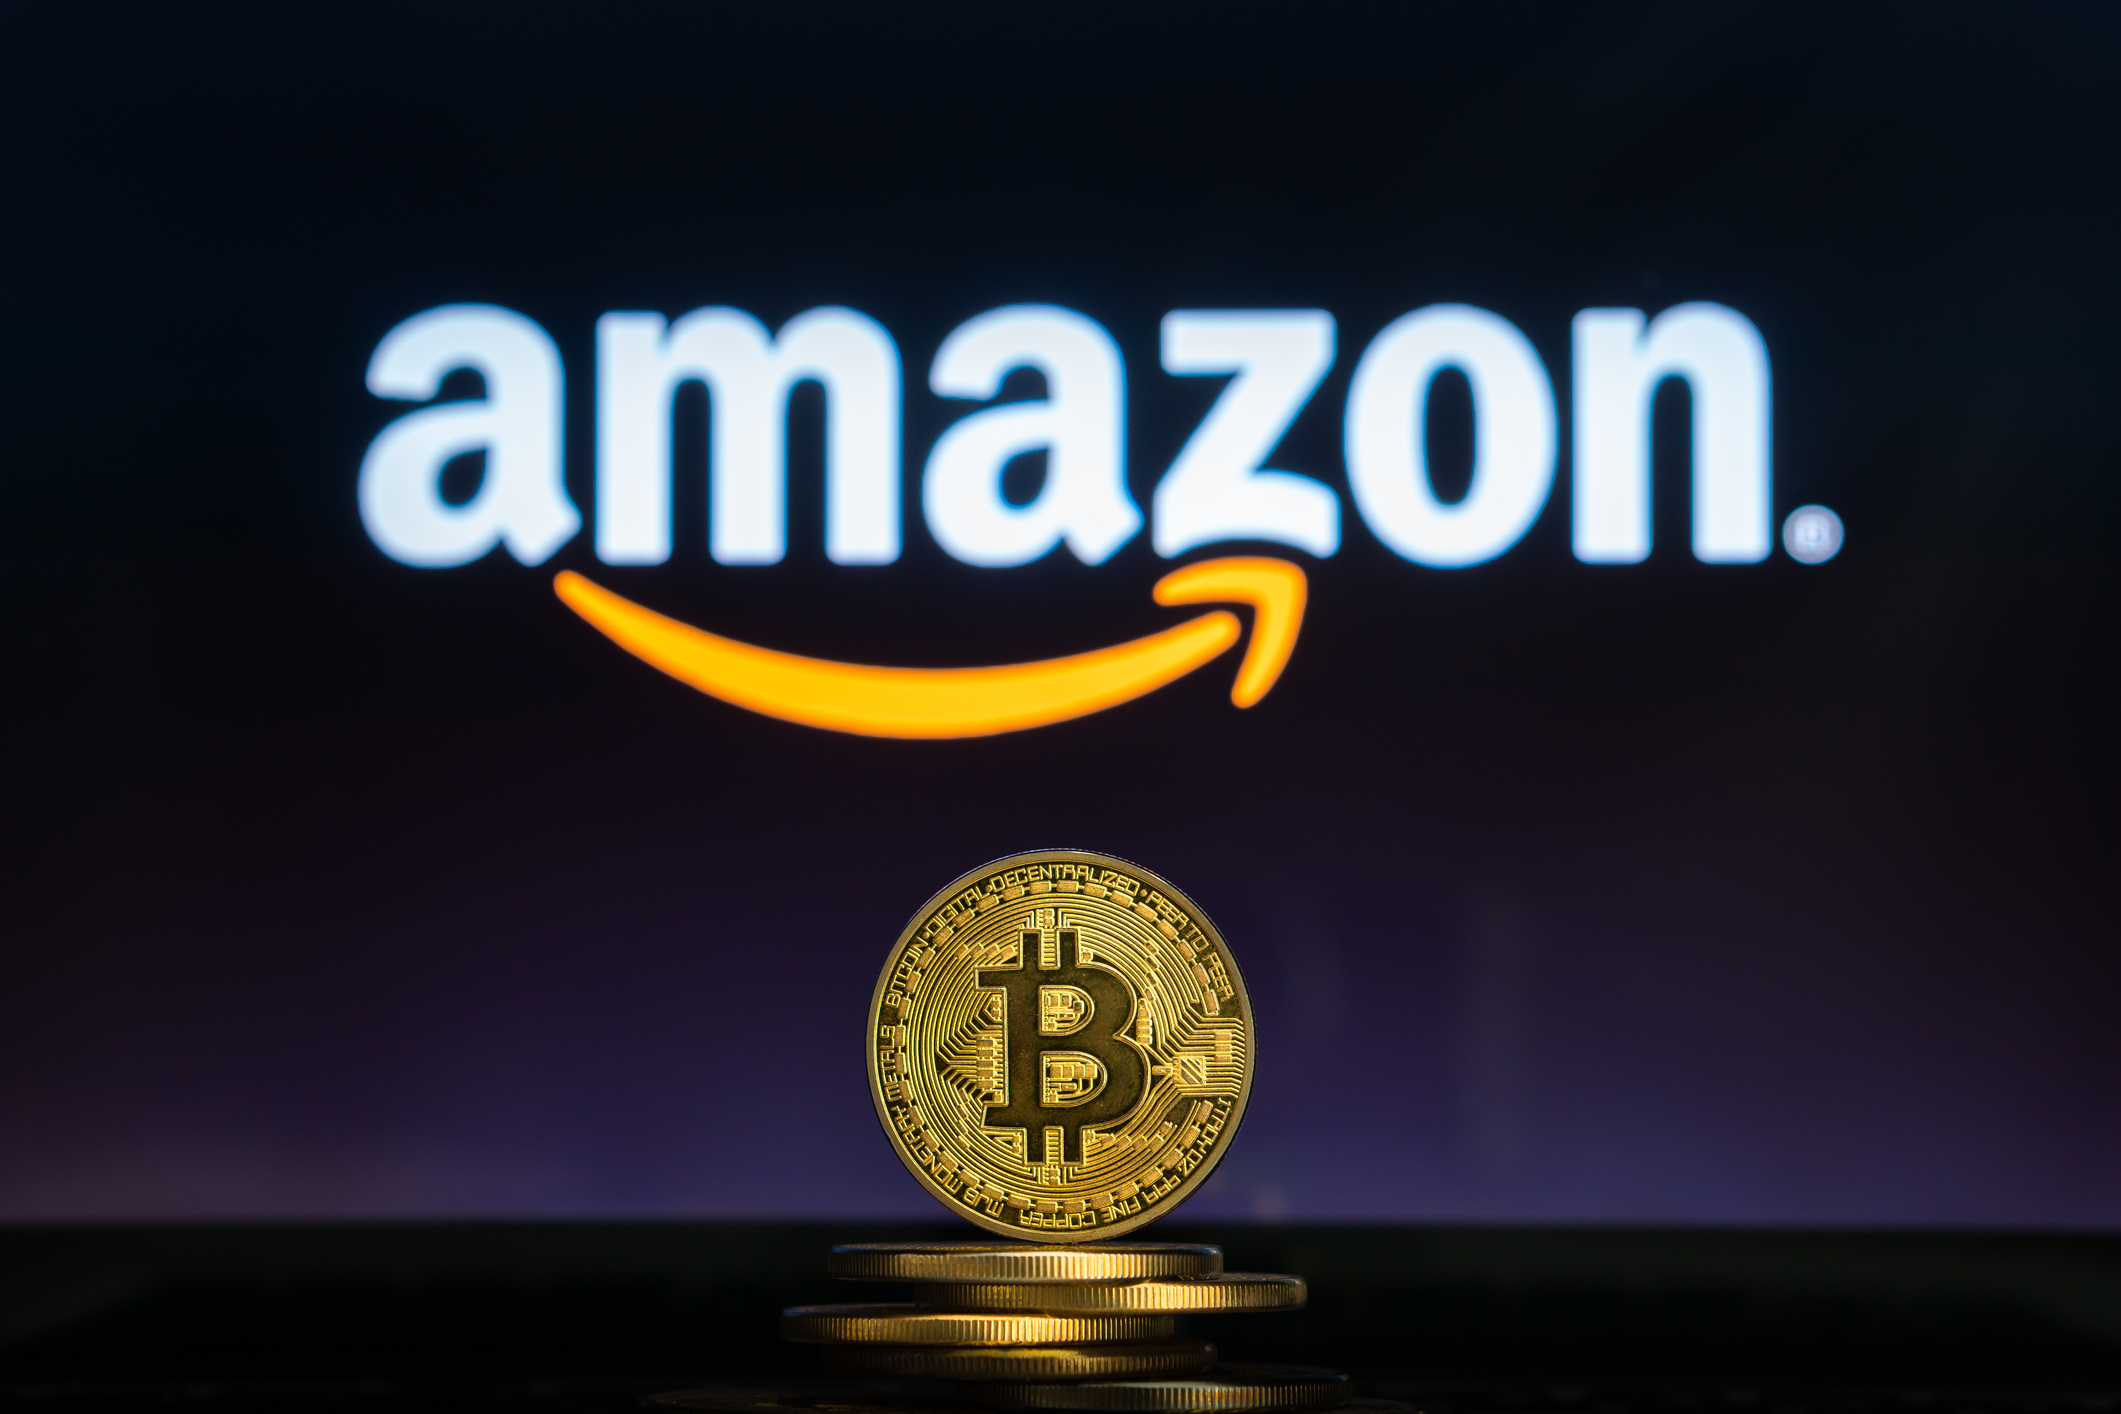 Amazon announcement bitcoin btc heat unlimited spin